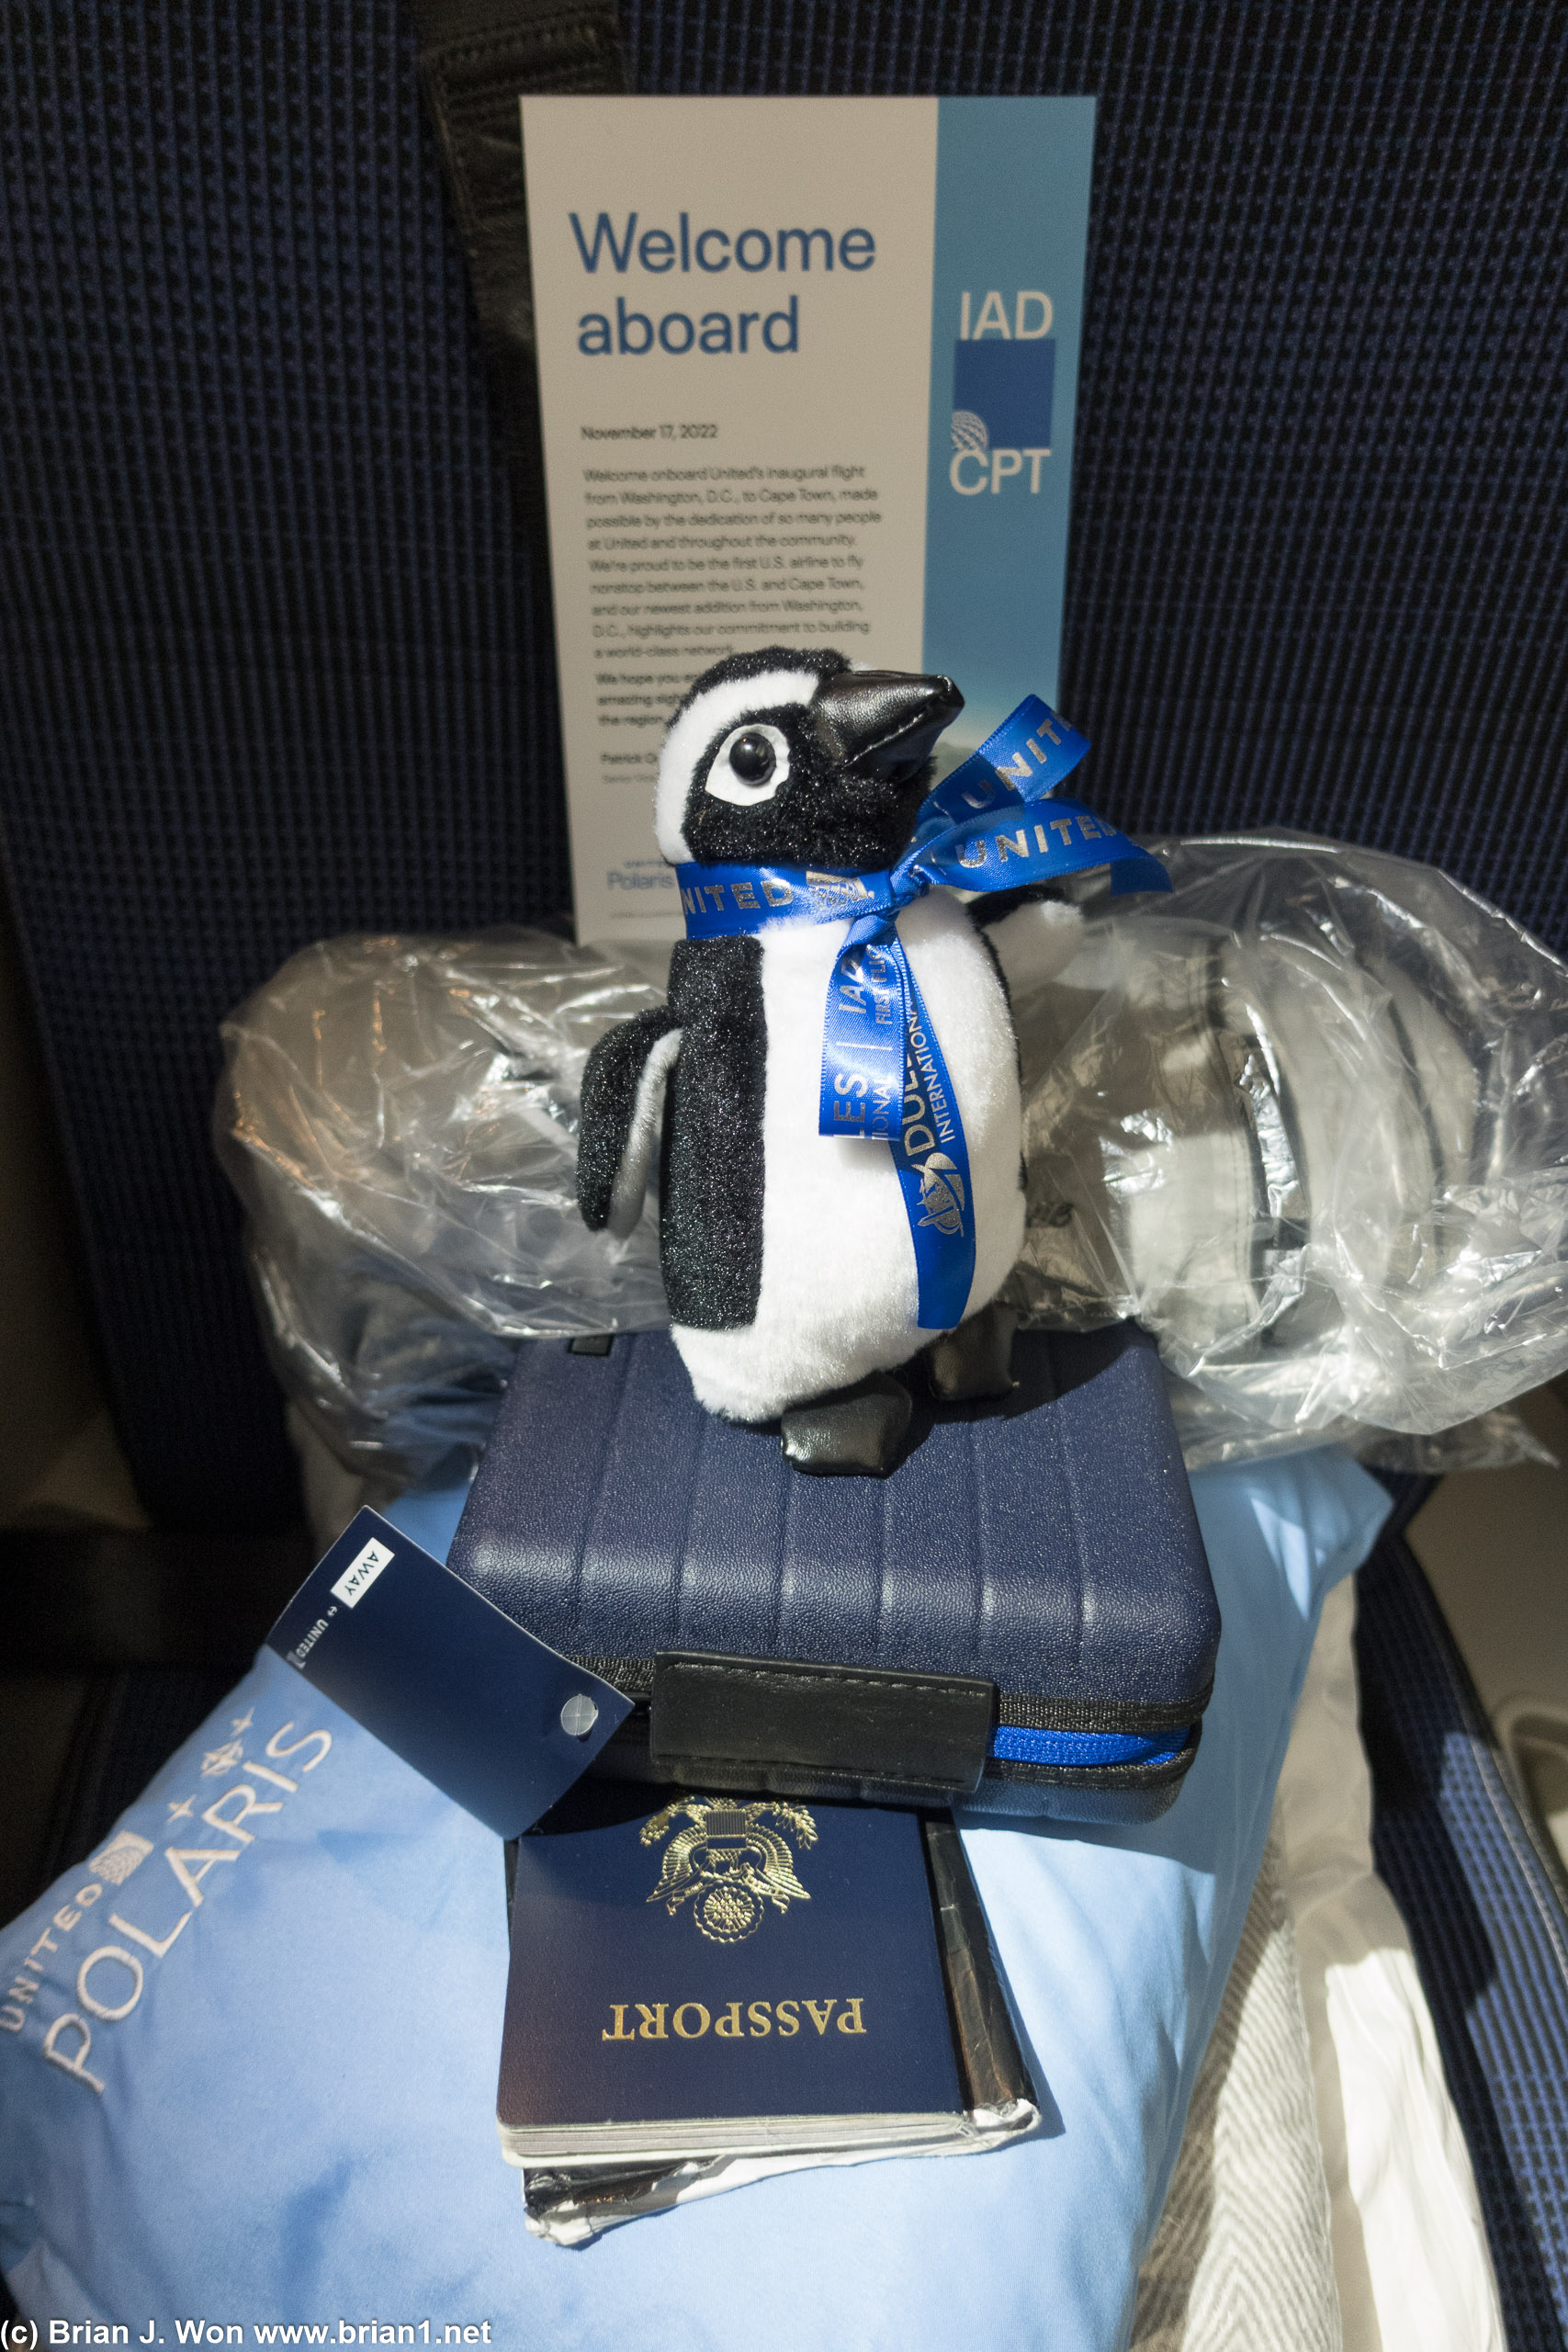 Inaugural flight penguin atop the standard Away amenity kit.